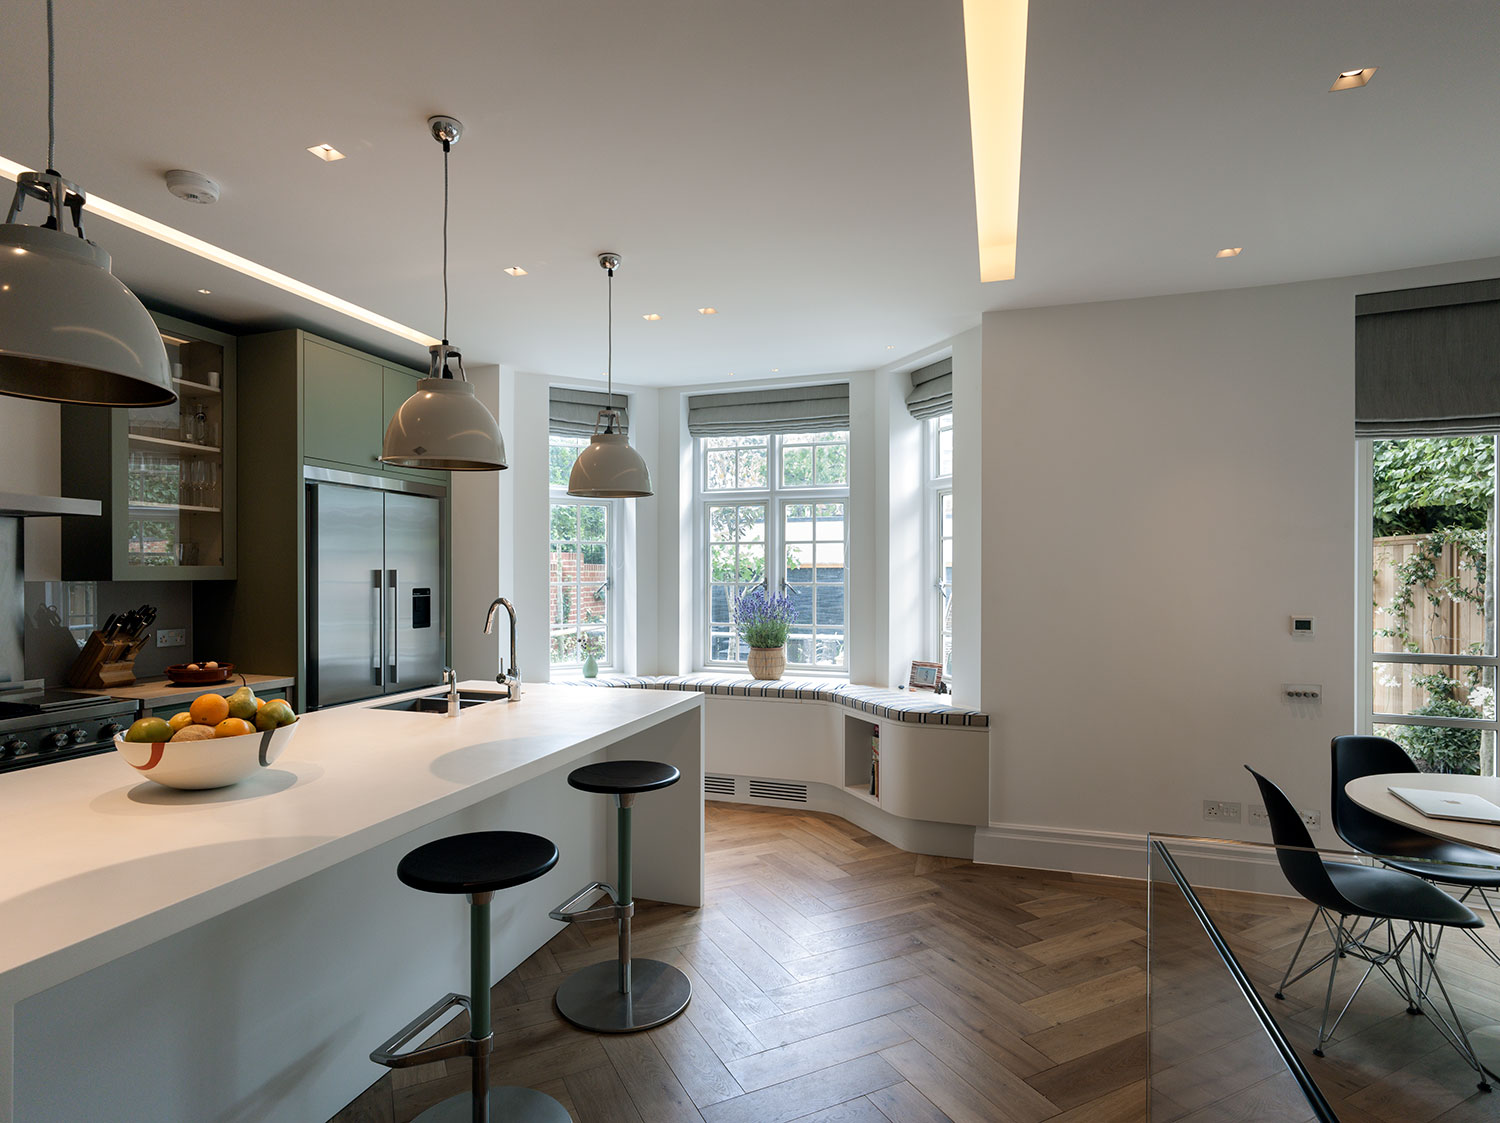 Luxury kitchen refurbishment, Belsize Park, London